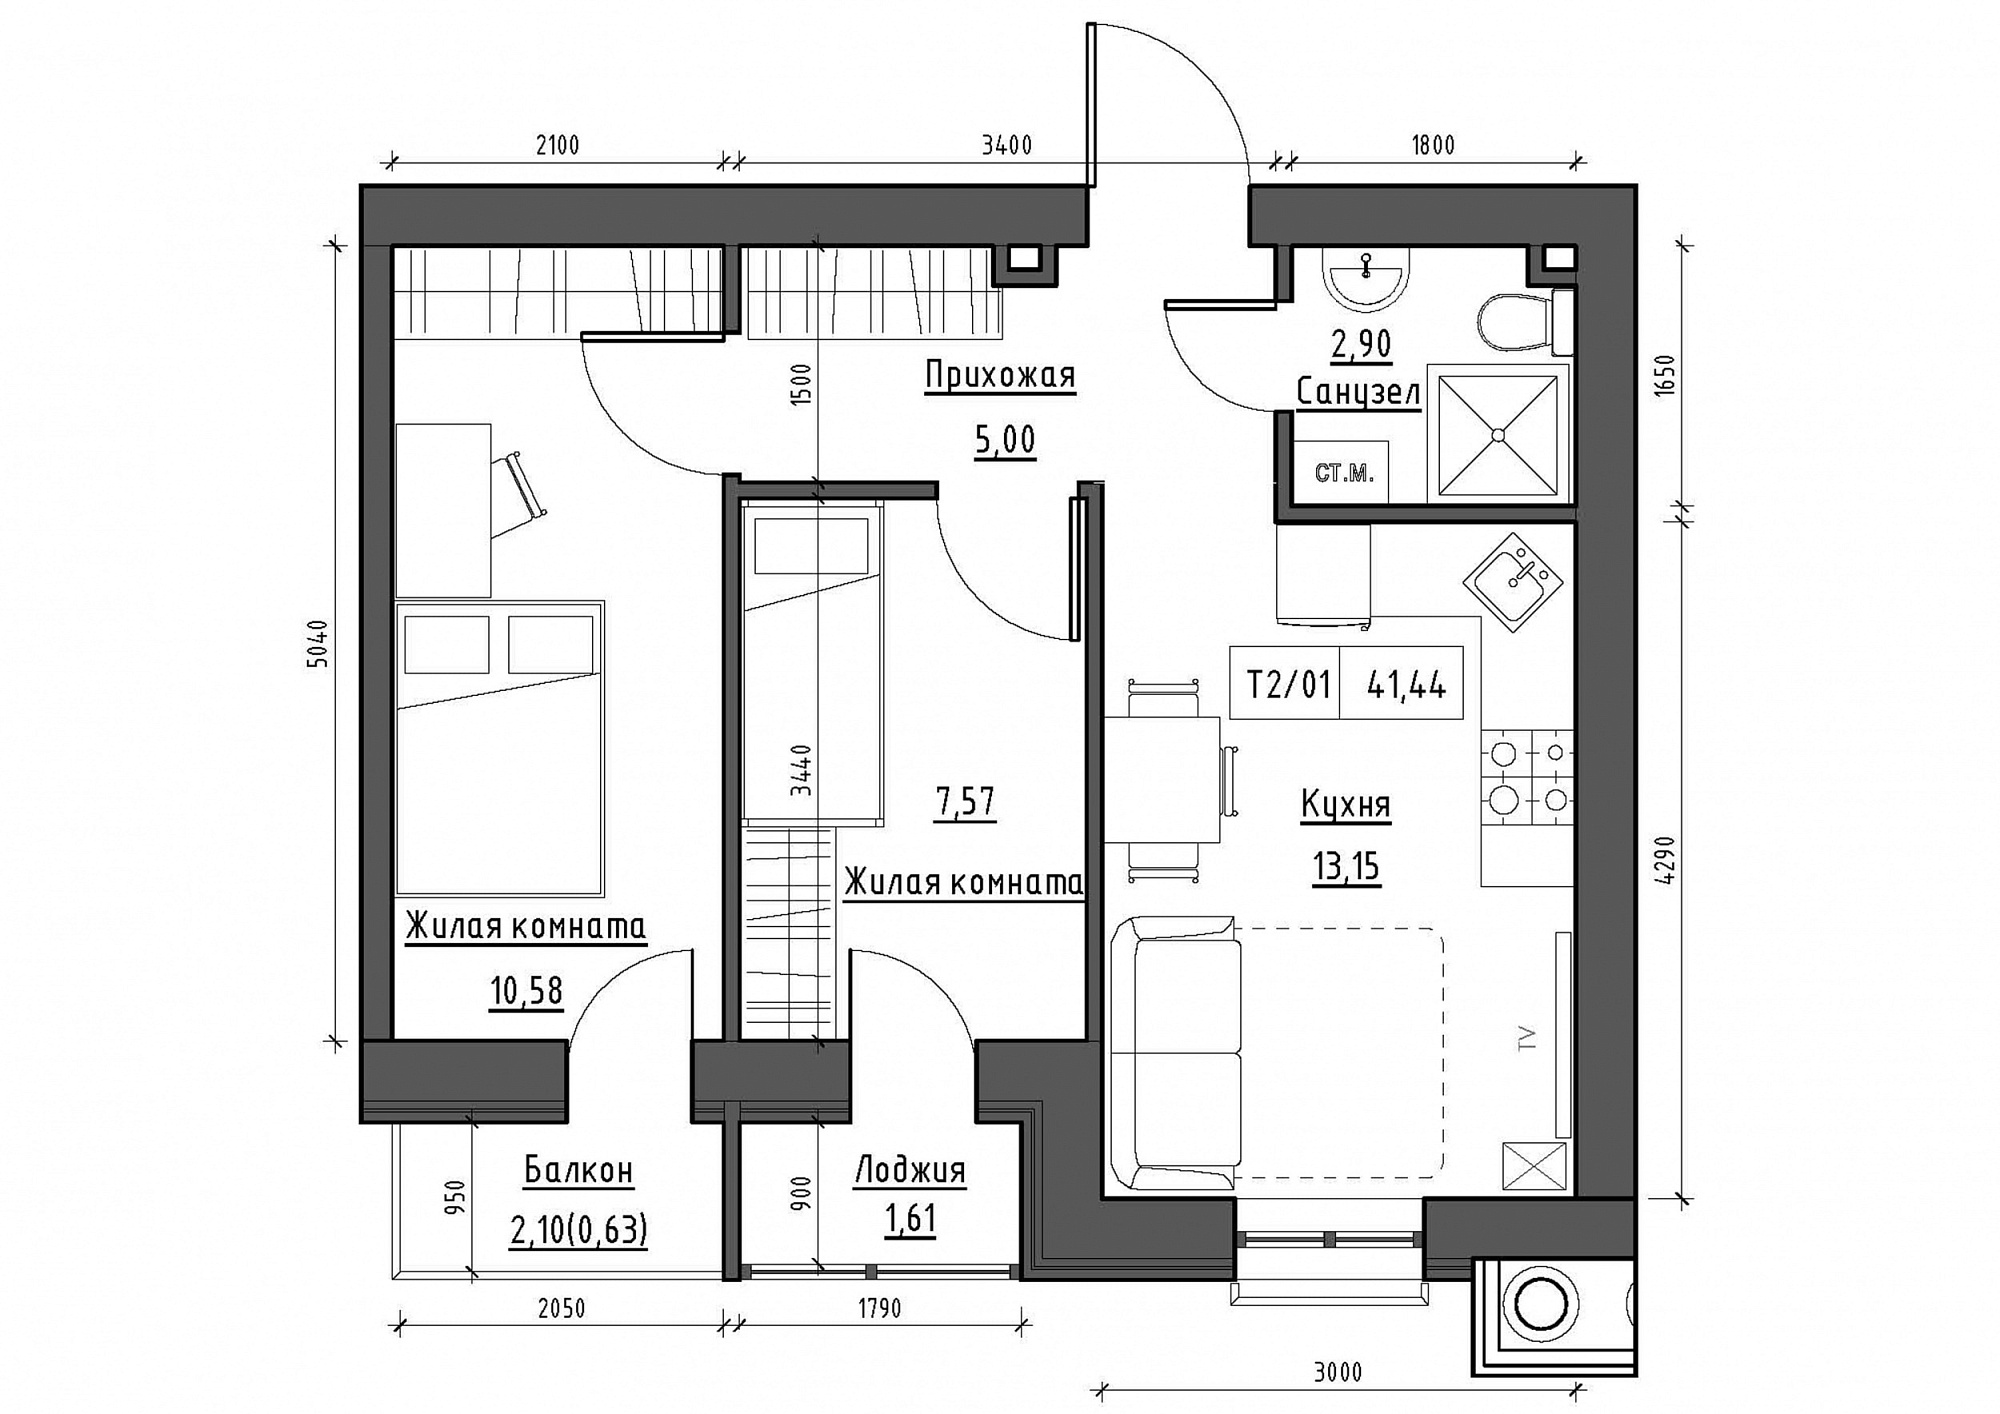 Planning 2-rm flats area 41.44m2, KS-011-04/0011.